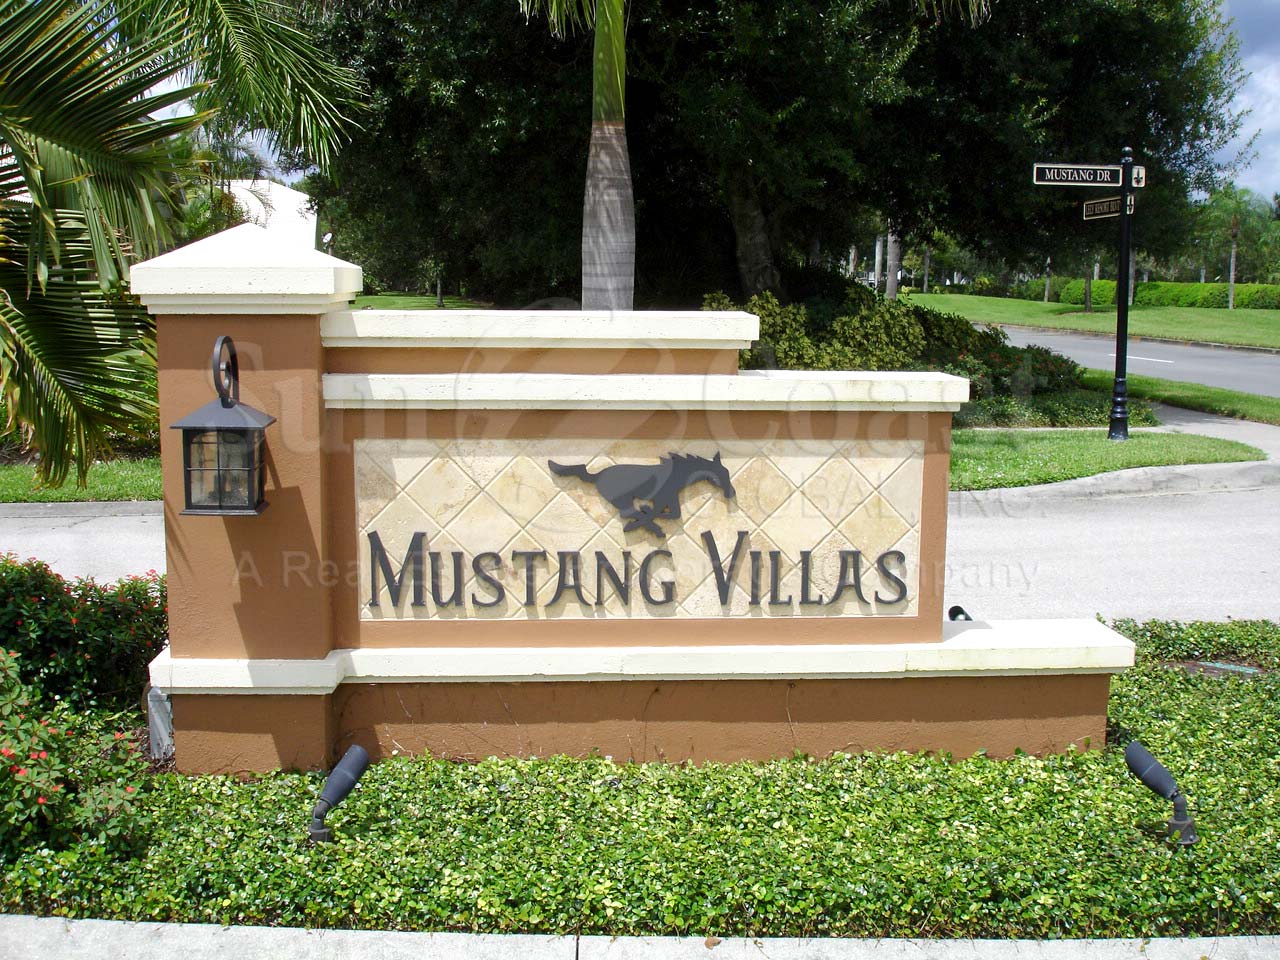 Mustang Villas signage